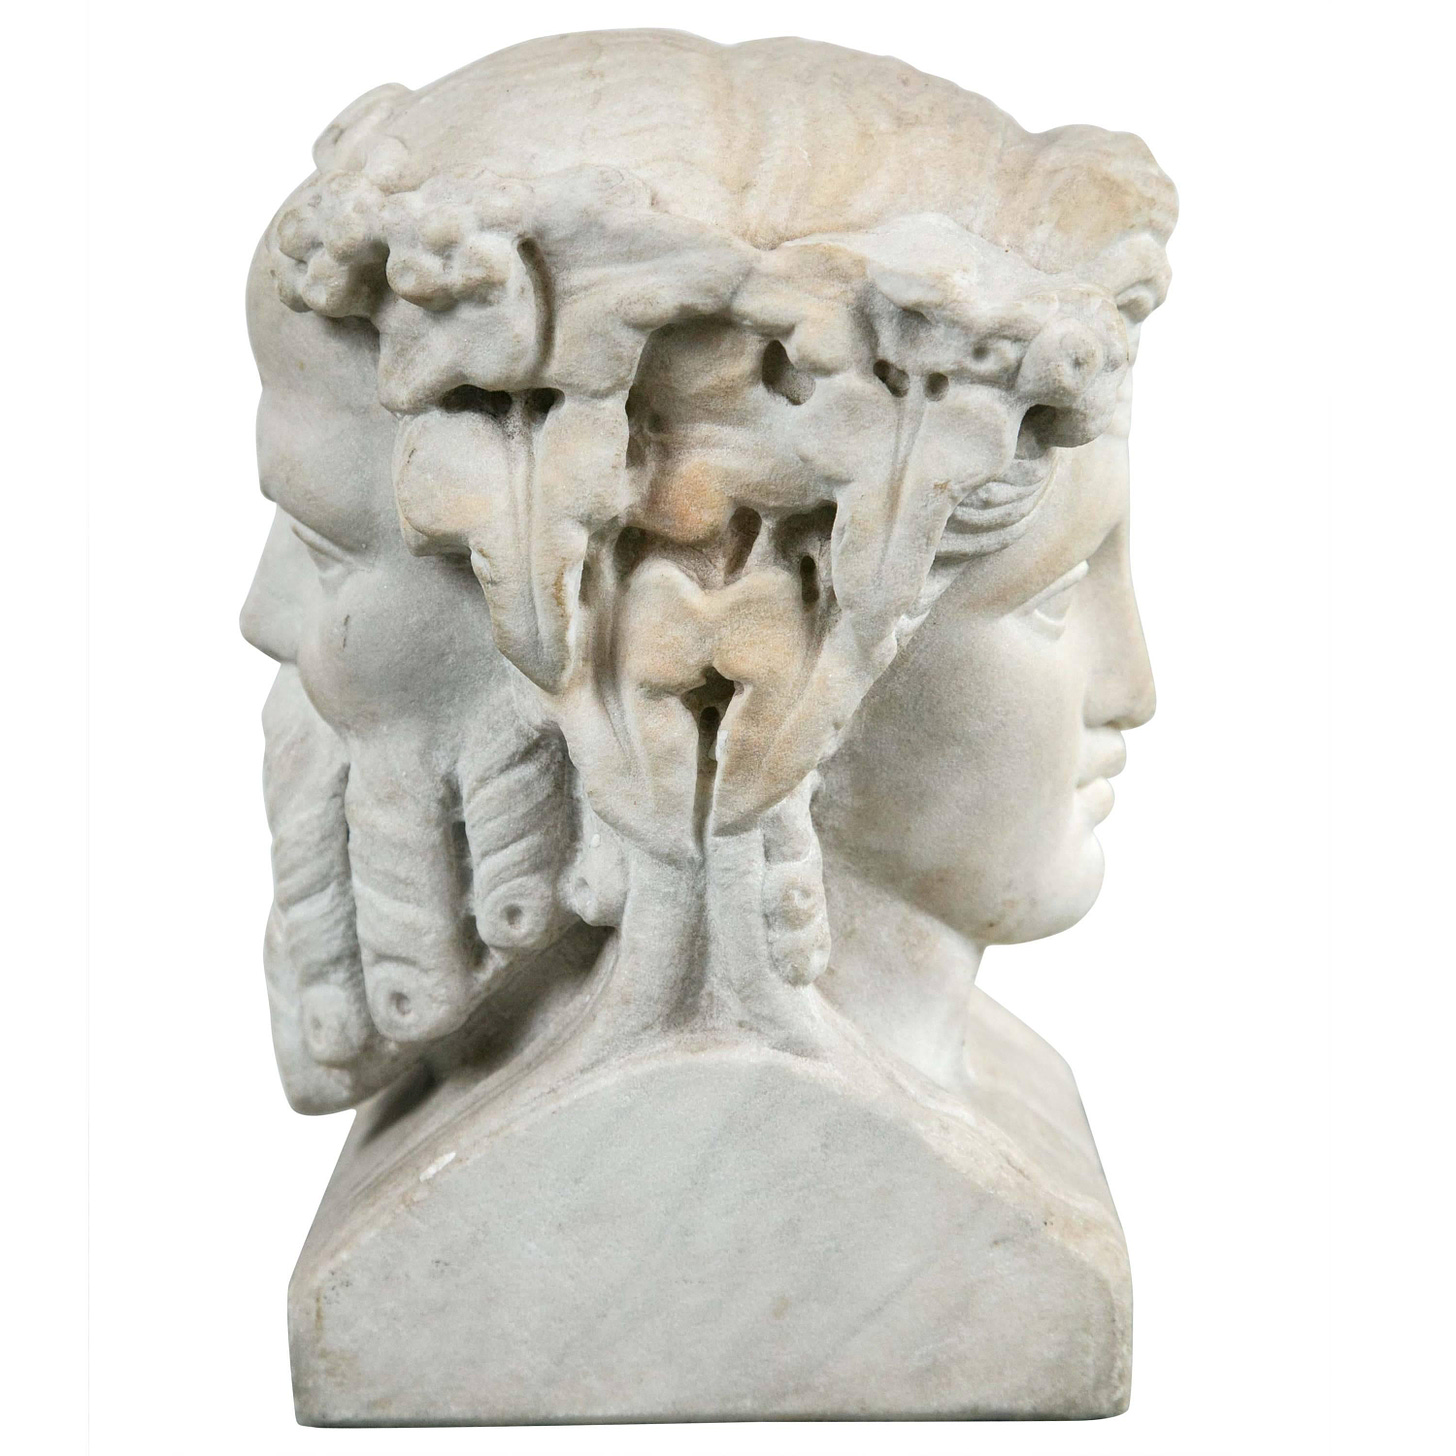 Carved Bust of the God Janus